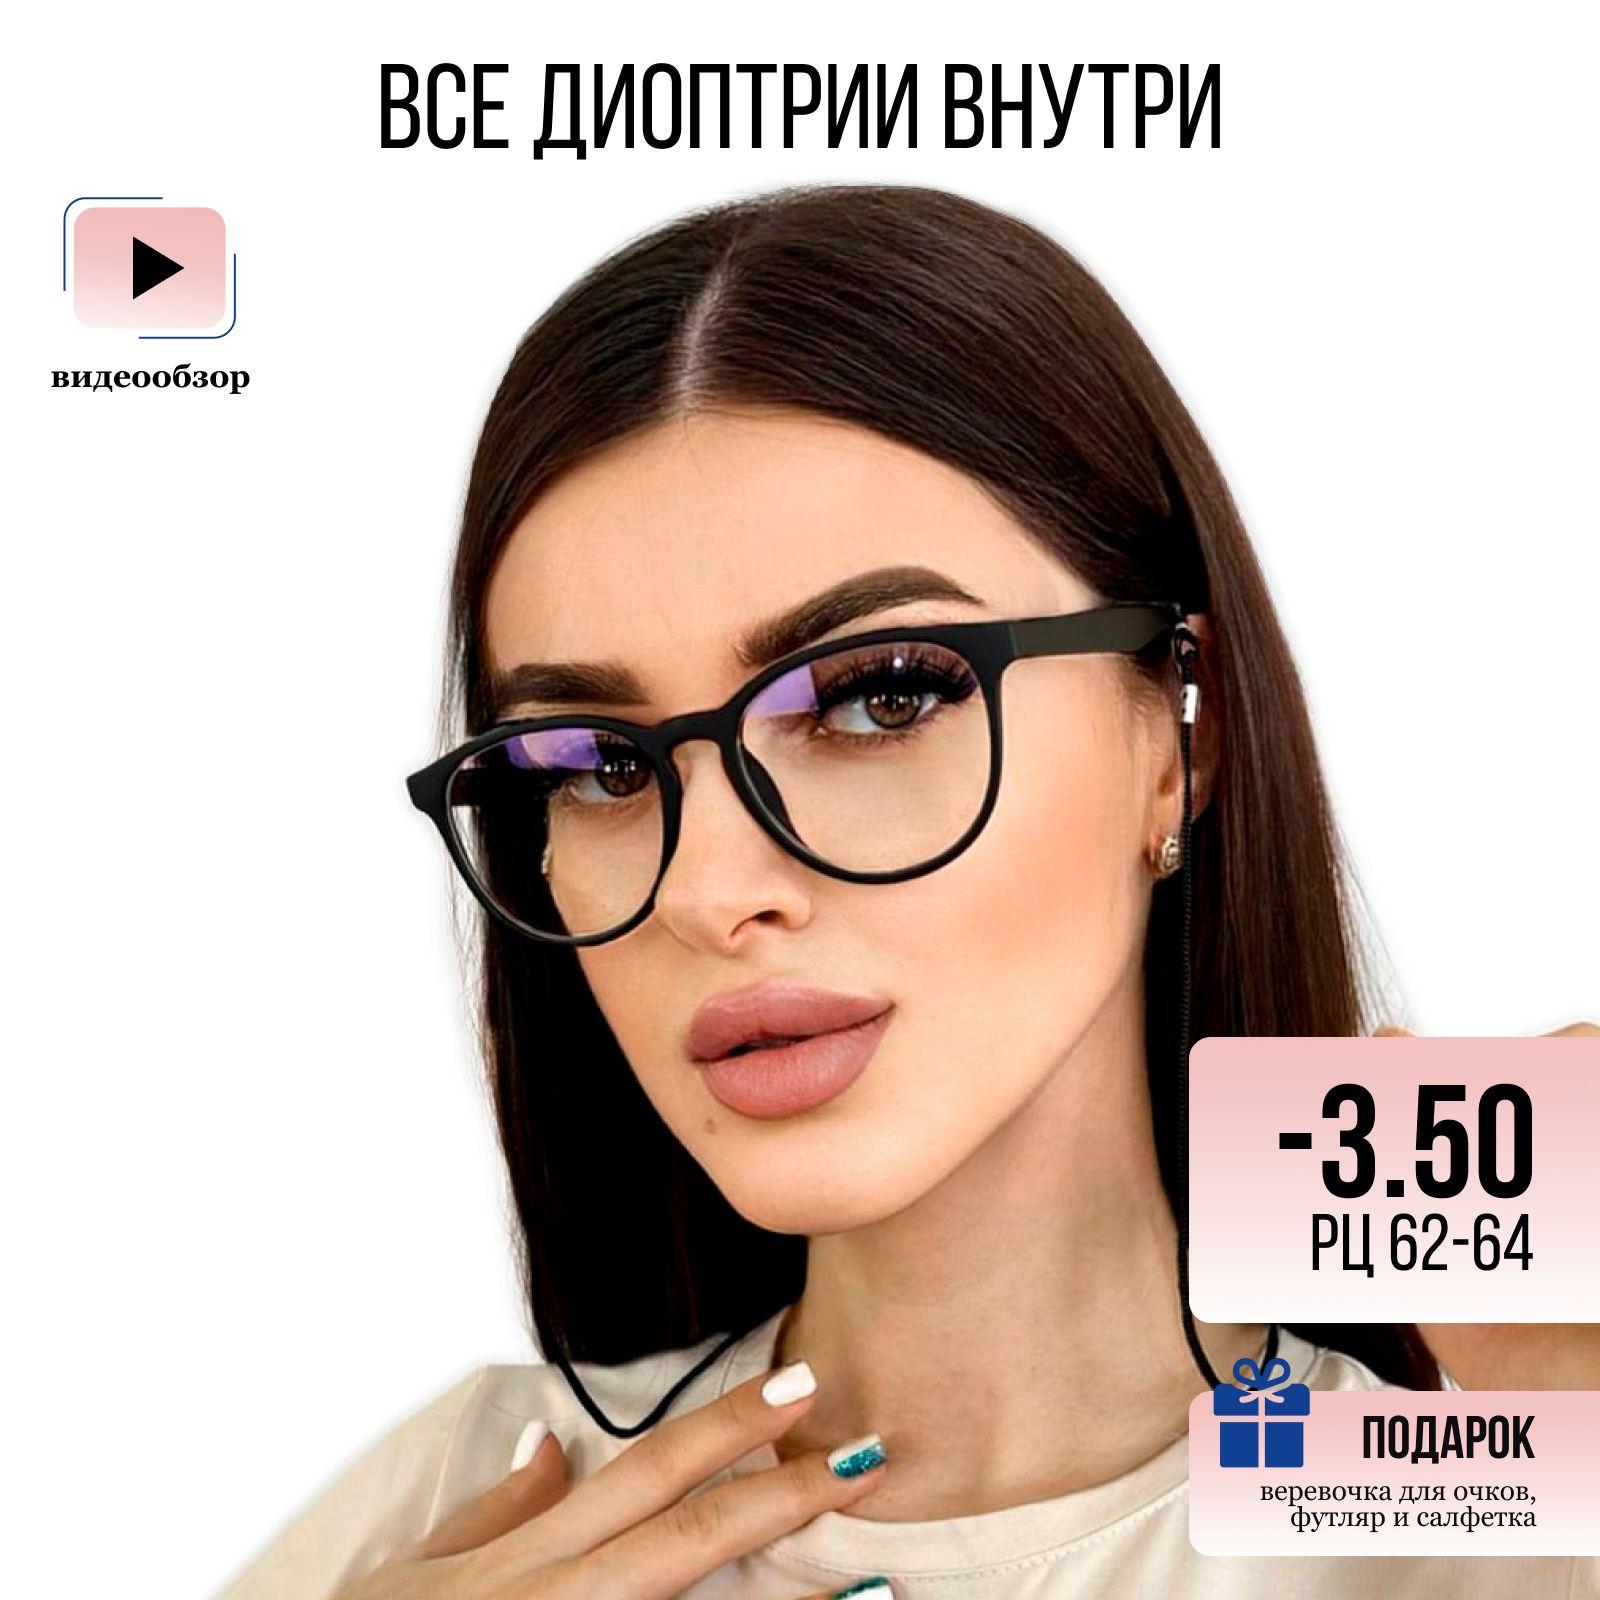 UltraGlass | Готовые женские очки для зрения - 3,5, корригирующие очки для чтения с диоптриями